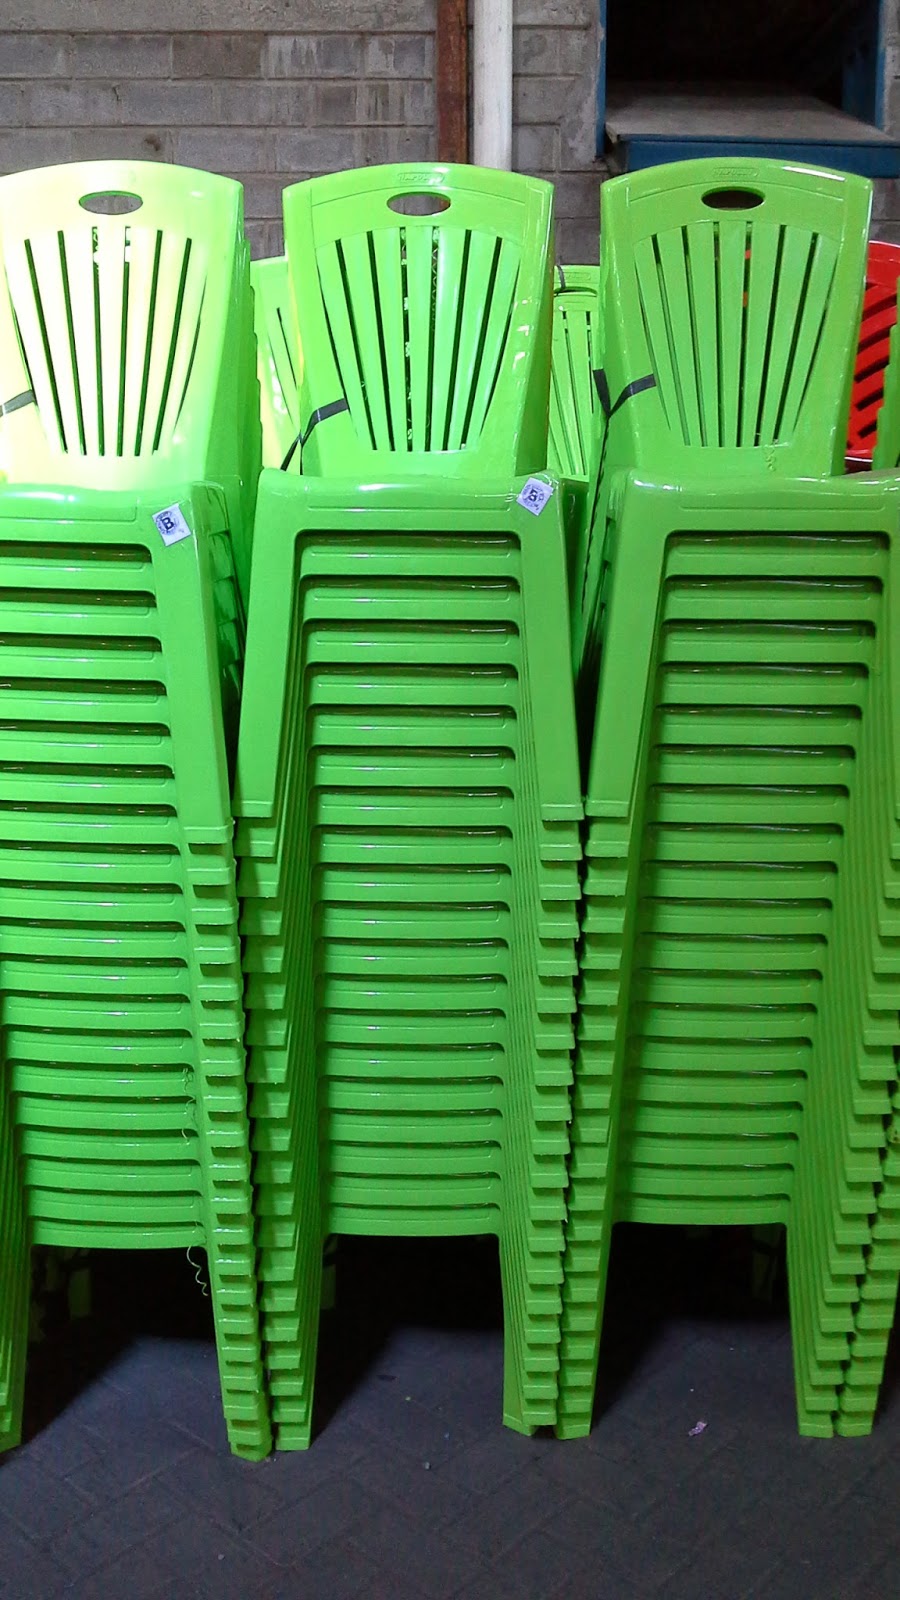 Selatan Jaya distributor barang plastik  furnitur Surabaya 